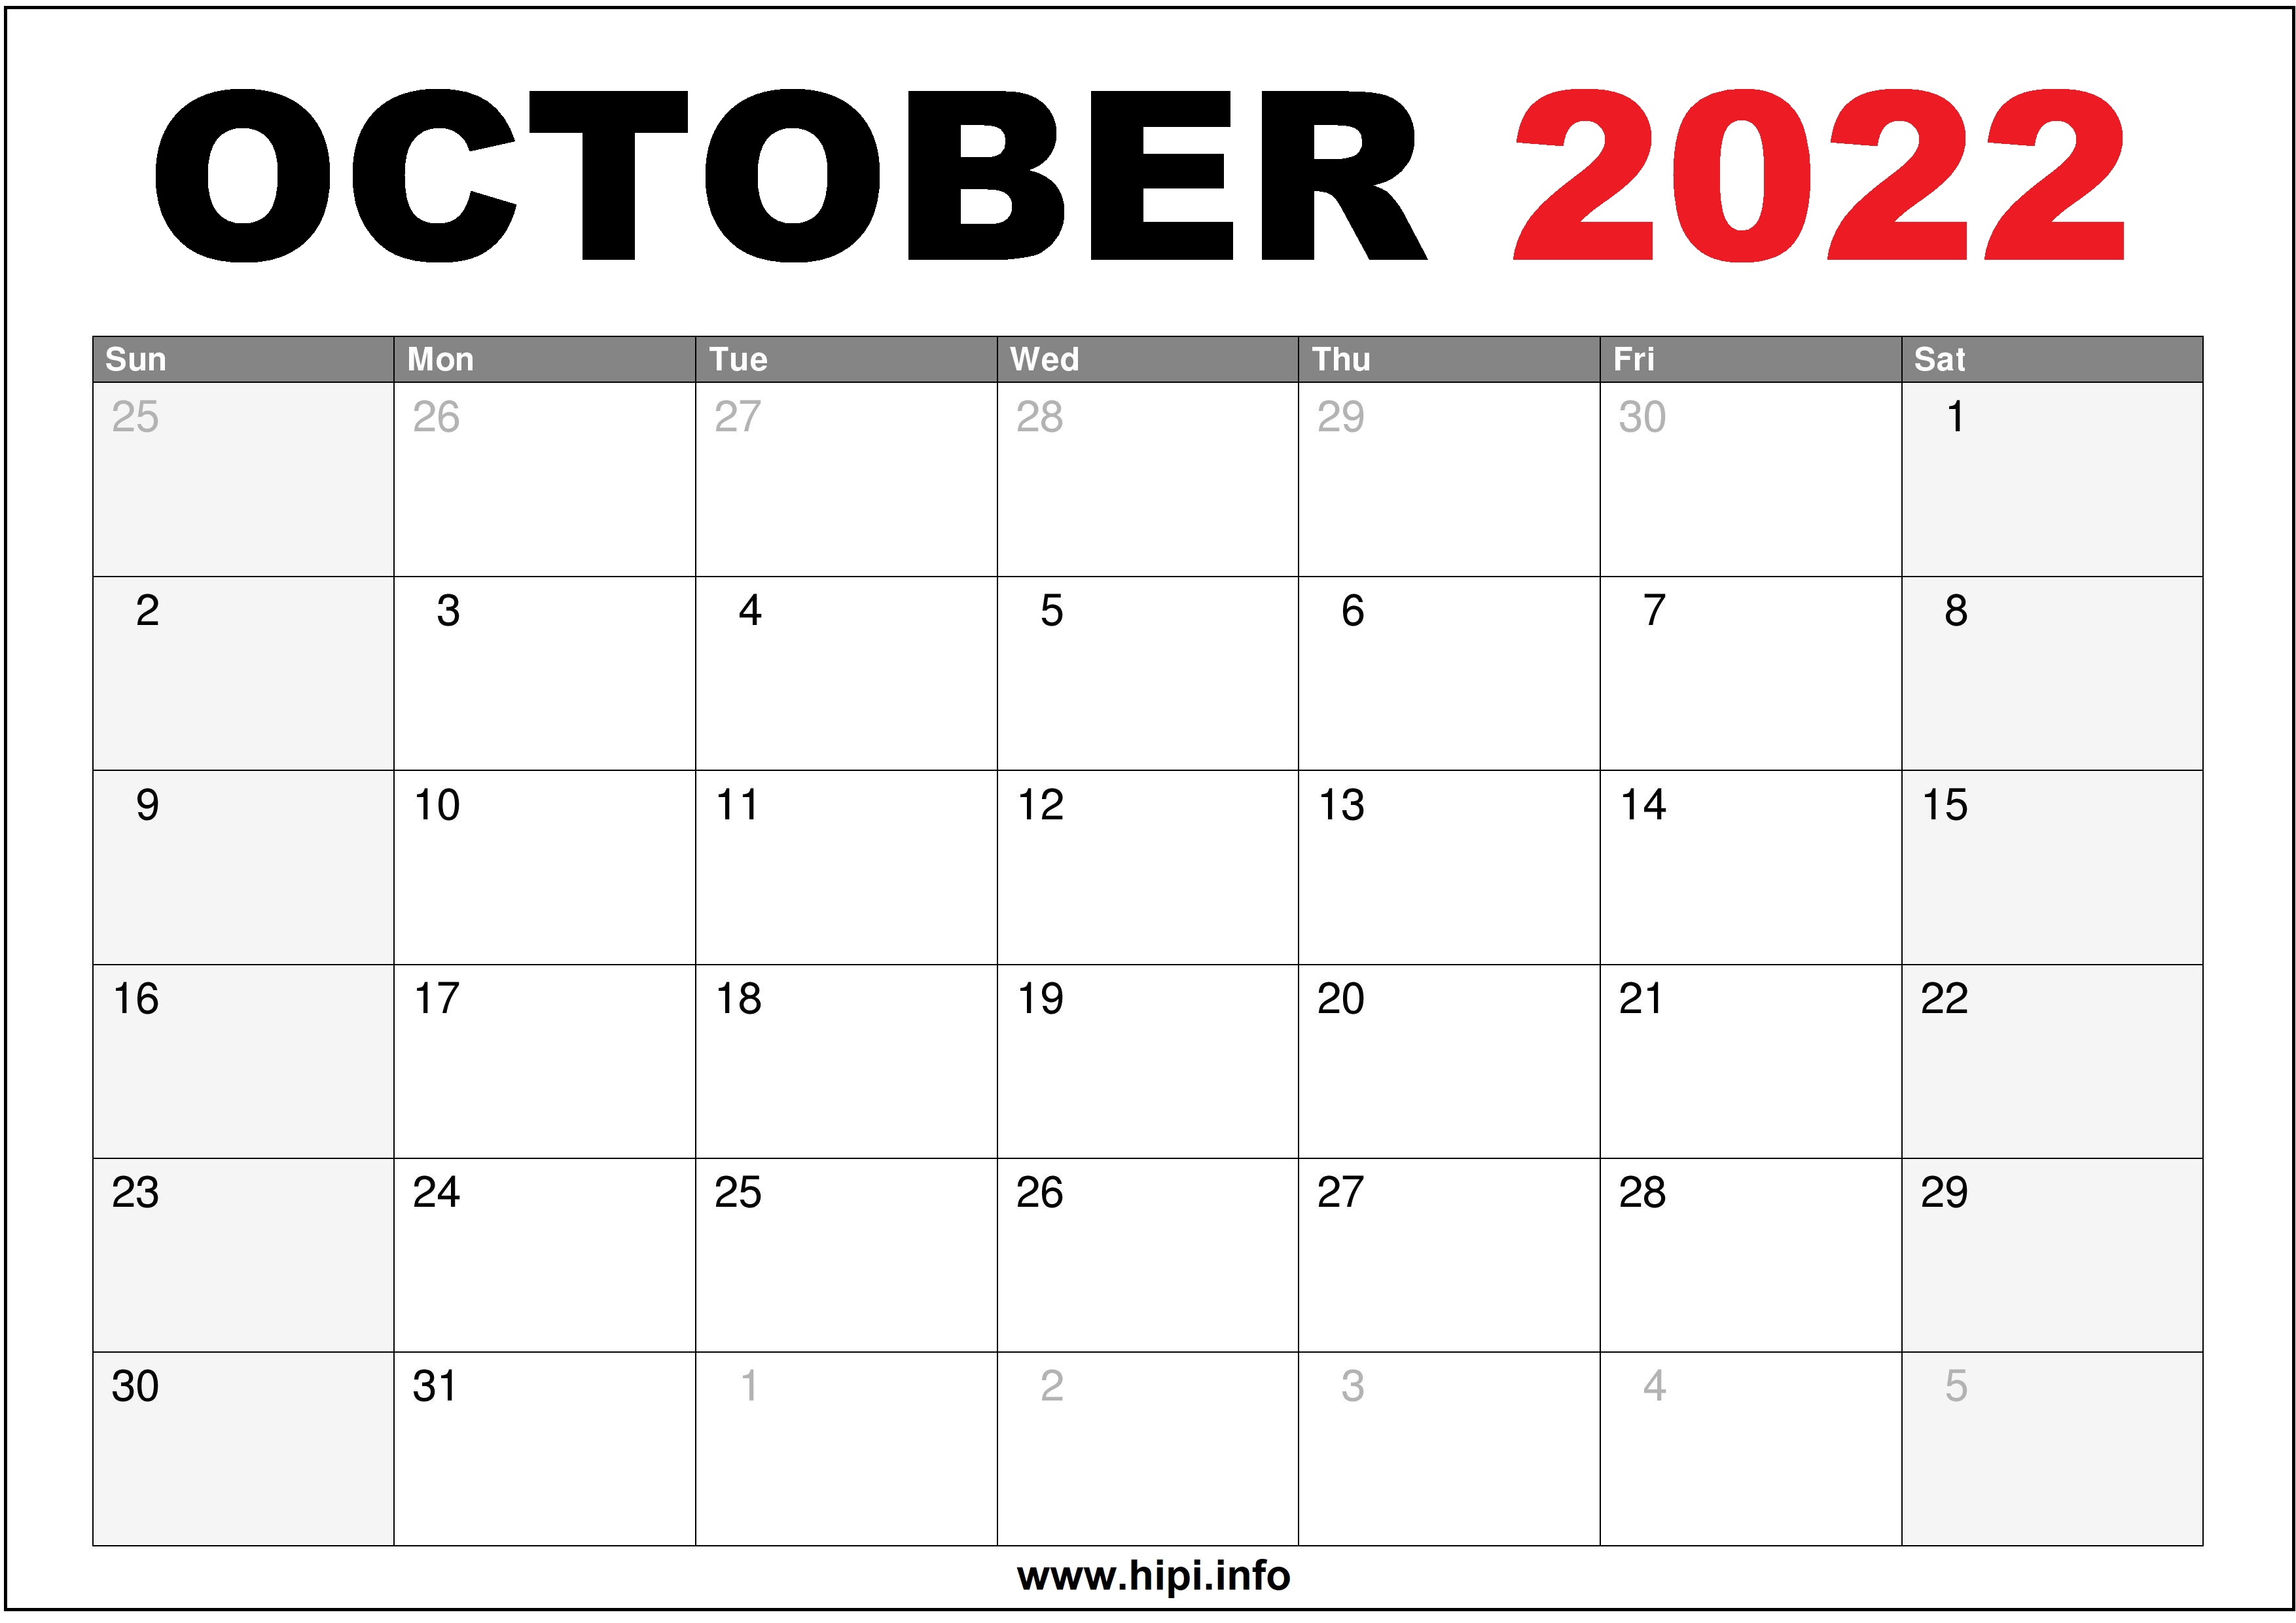 Oct 2022 Calendar October 2022 Calendar Printable Us - Hipi.info | Calendars Printable Free